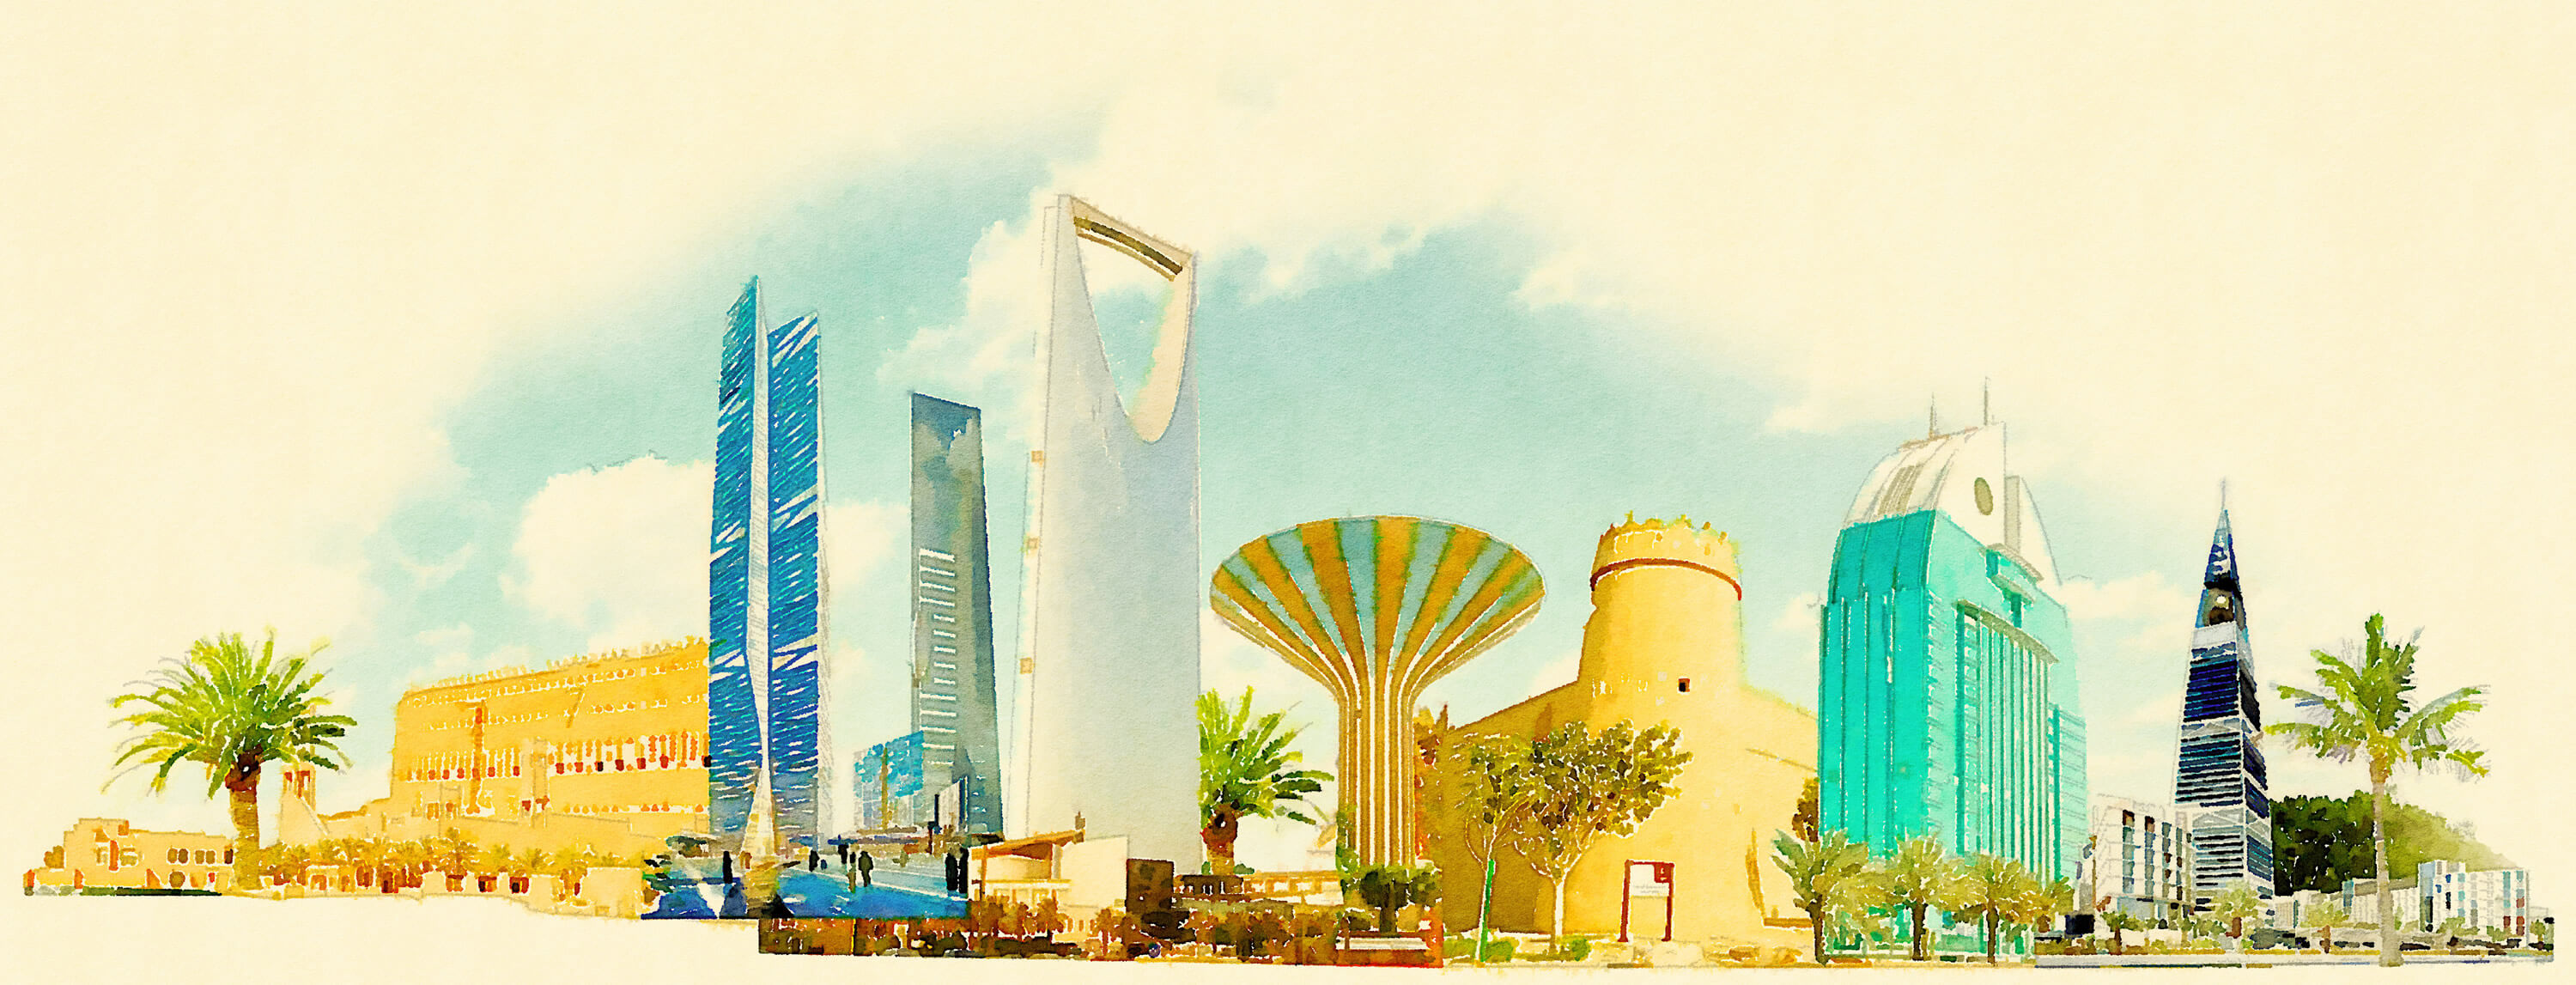 Illustration Riyadh, Saudi Arabia